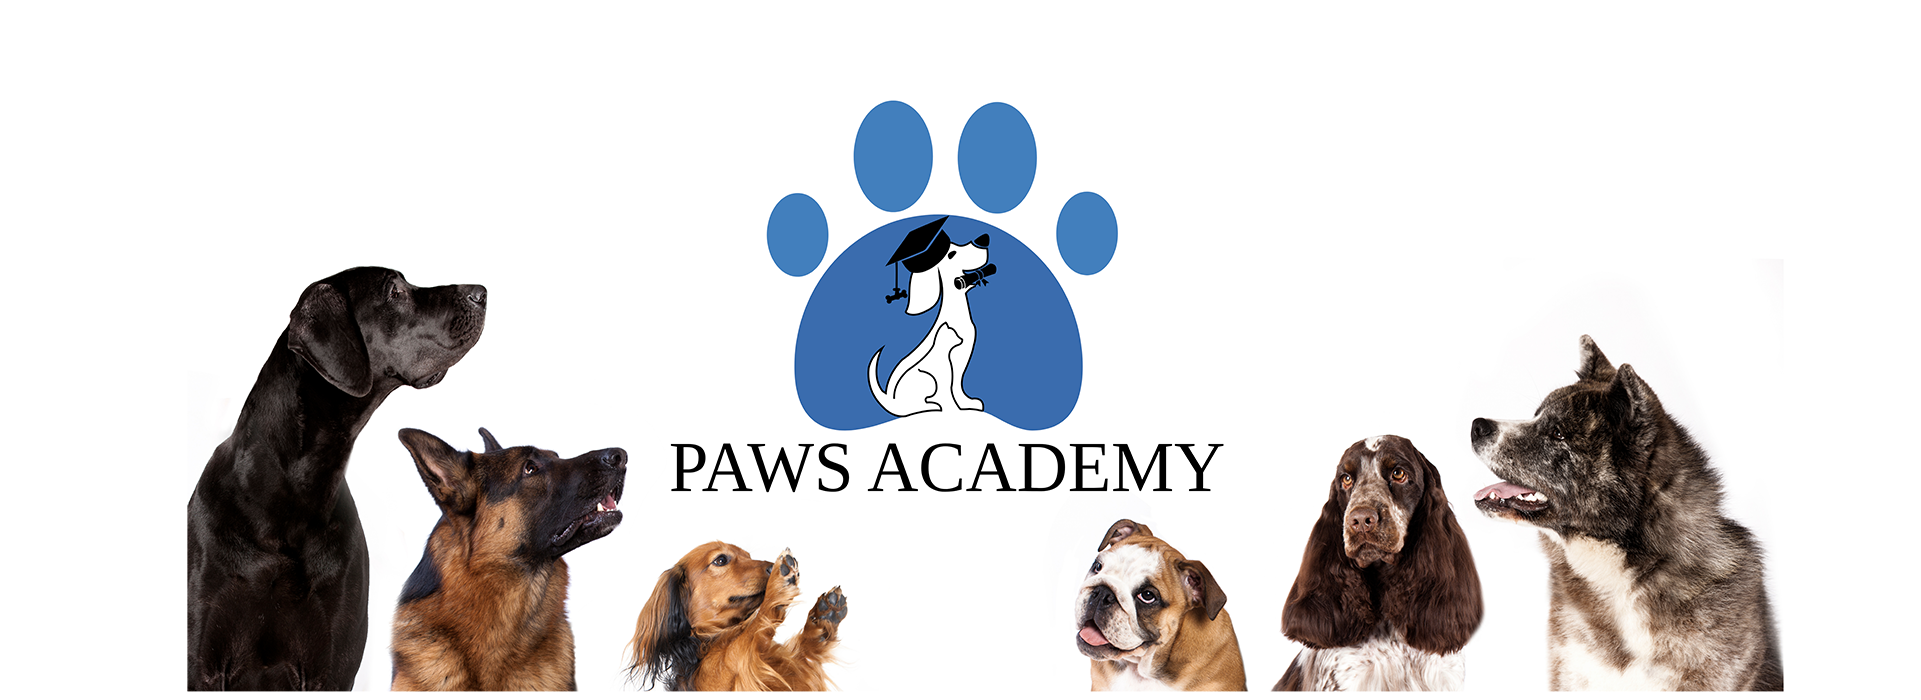 Paws Academy